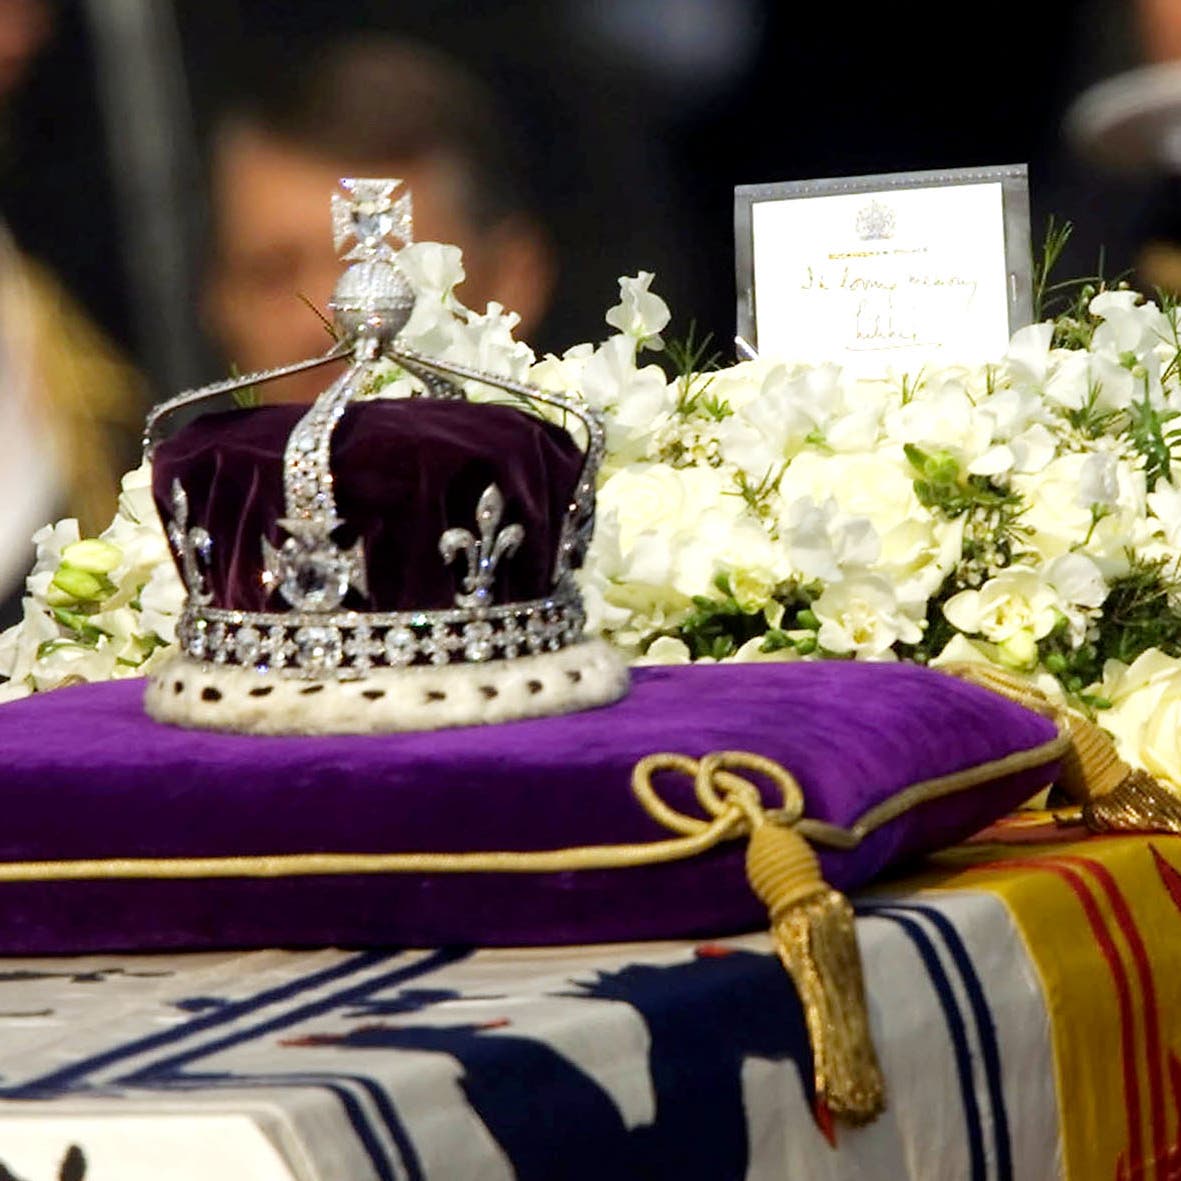 Queen Elizabeth’s death sparks renewed demand for return of Kohinoor diamond to India